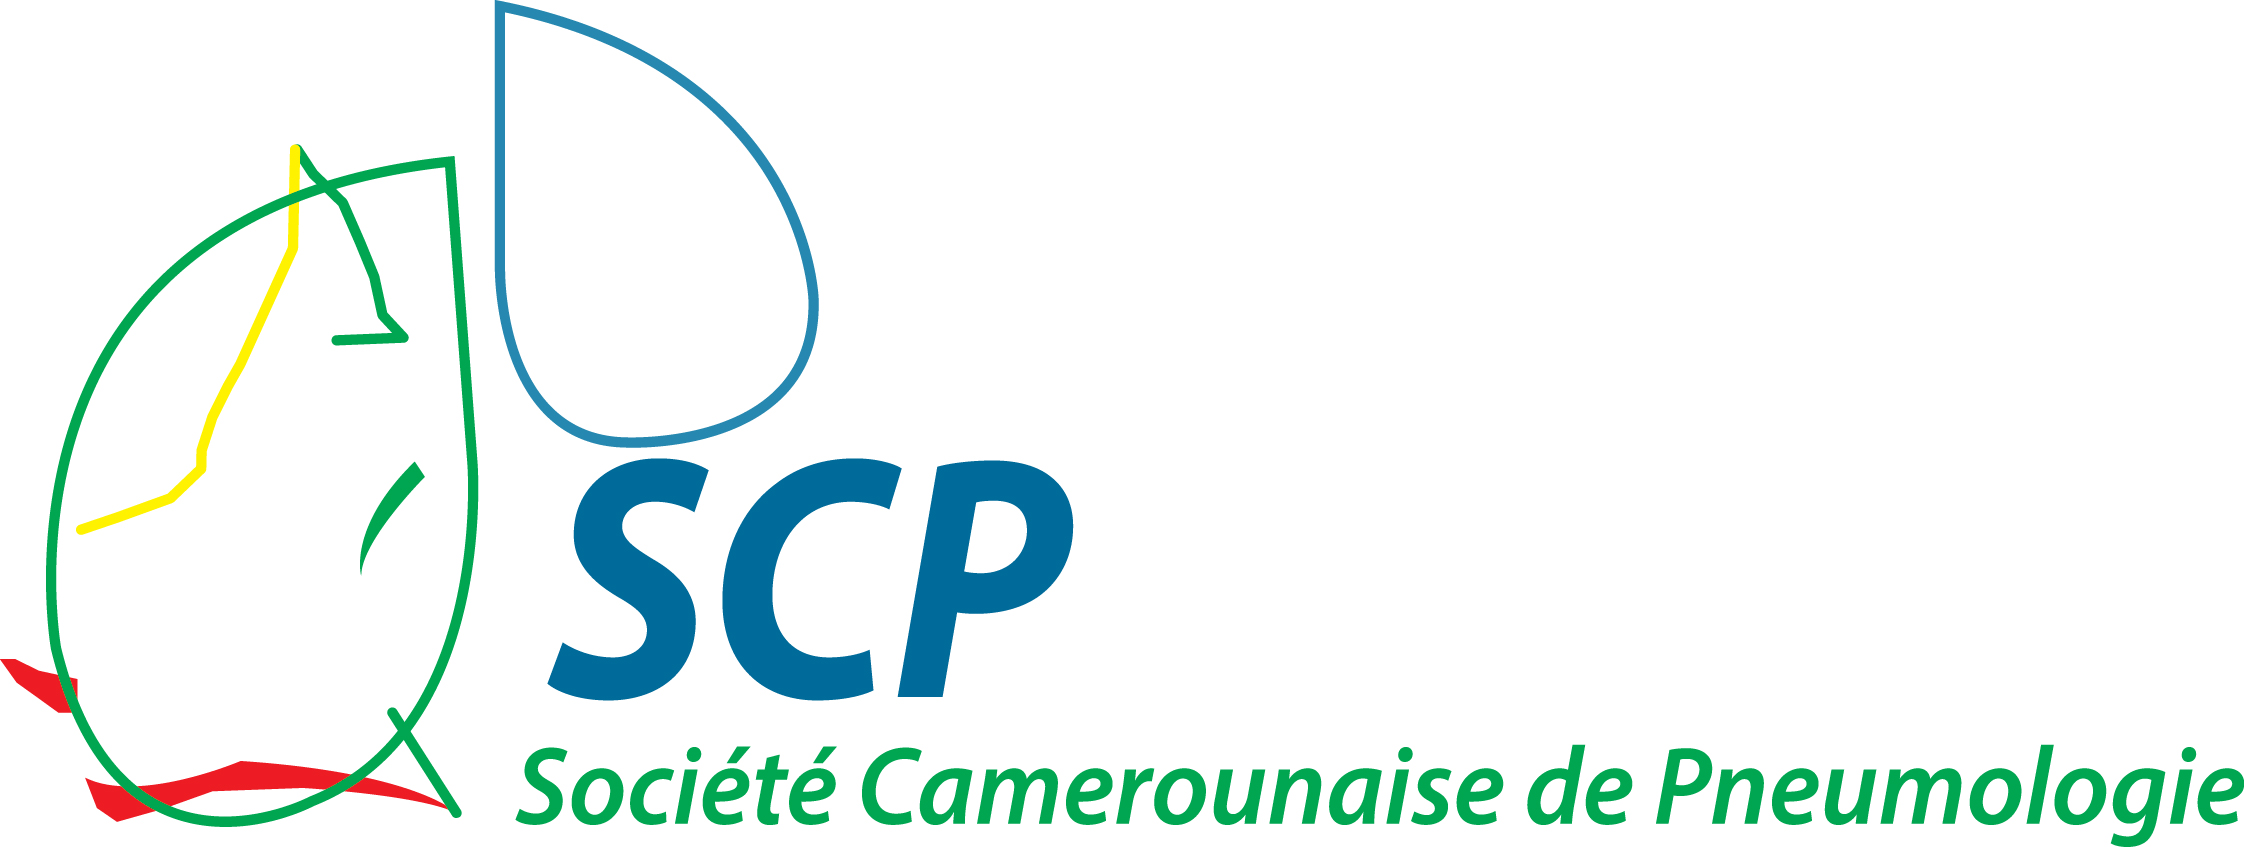 société camerounaise de pneumologie